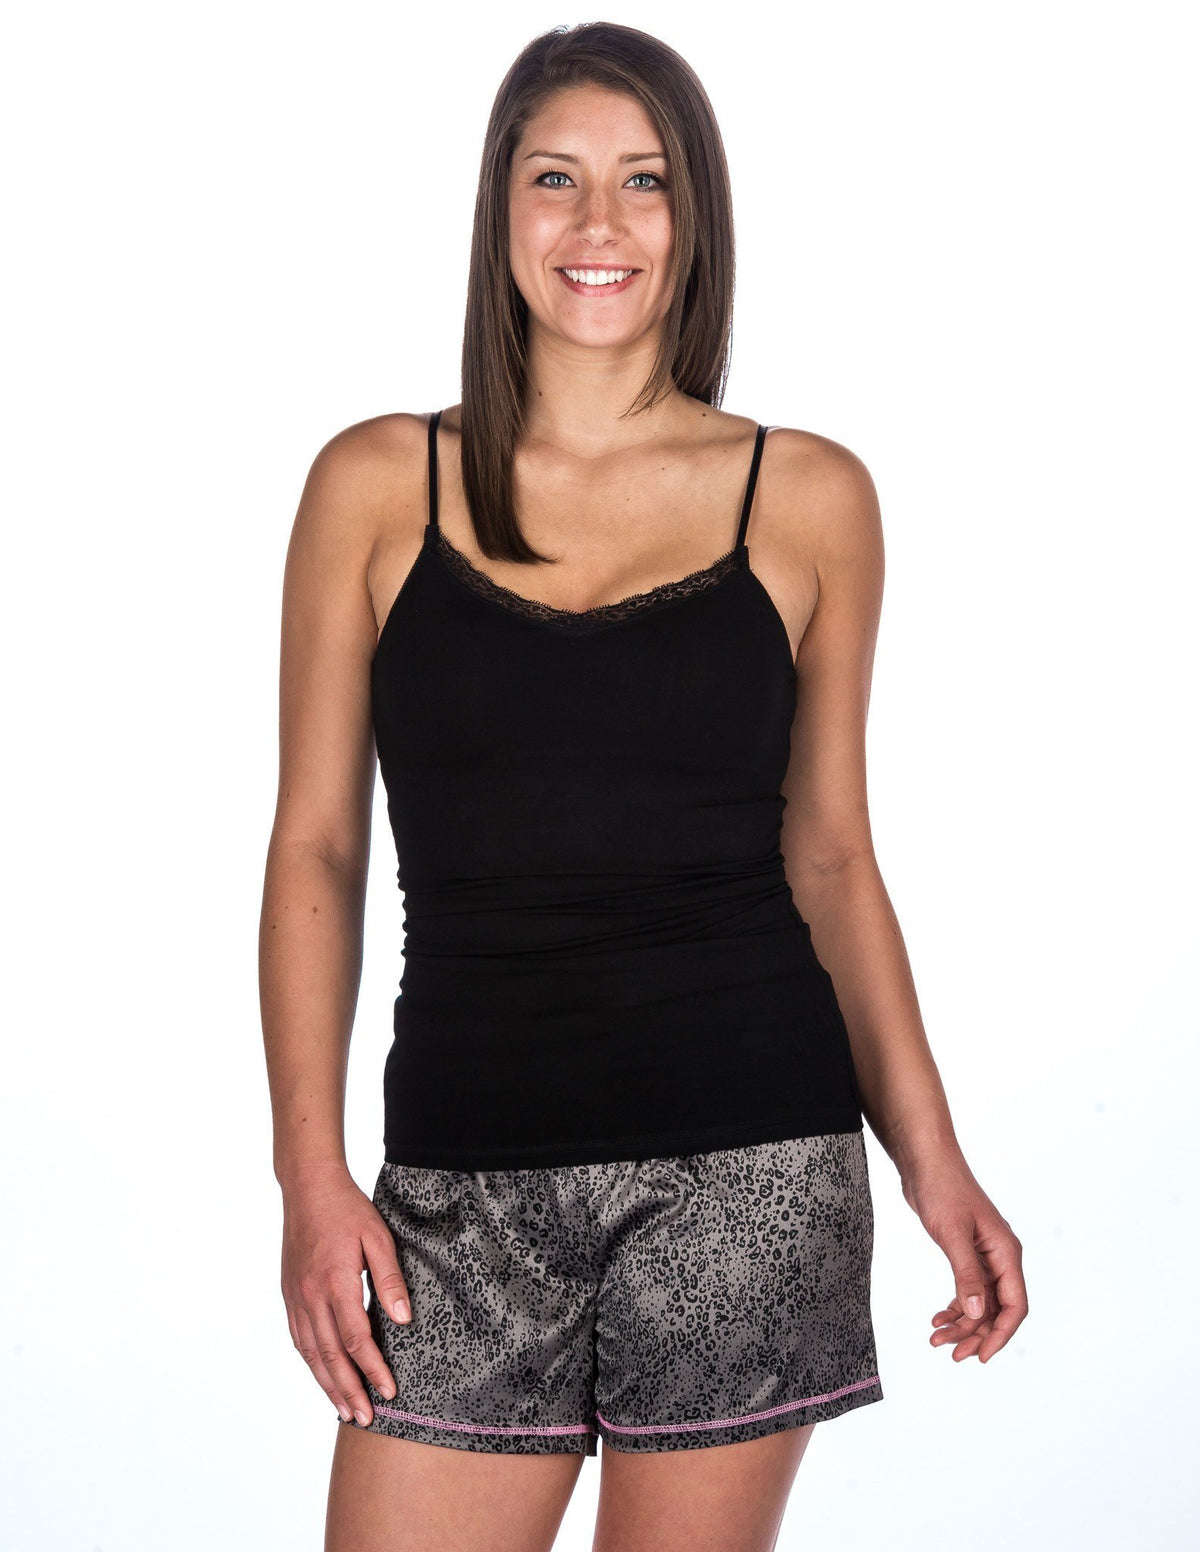 Women's Premium Satin Shorts and Cami Sleep Set - Leopard - Gray/Black